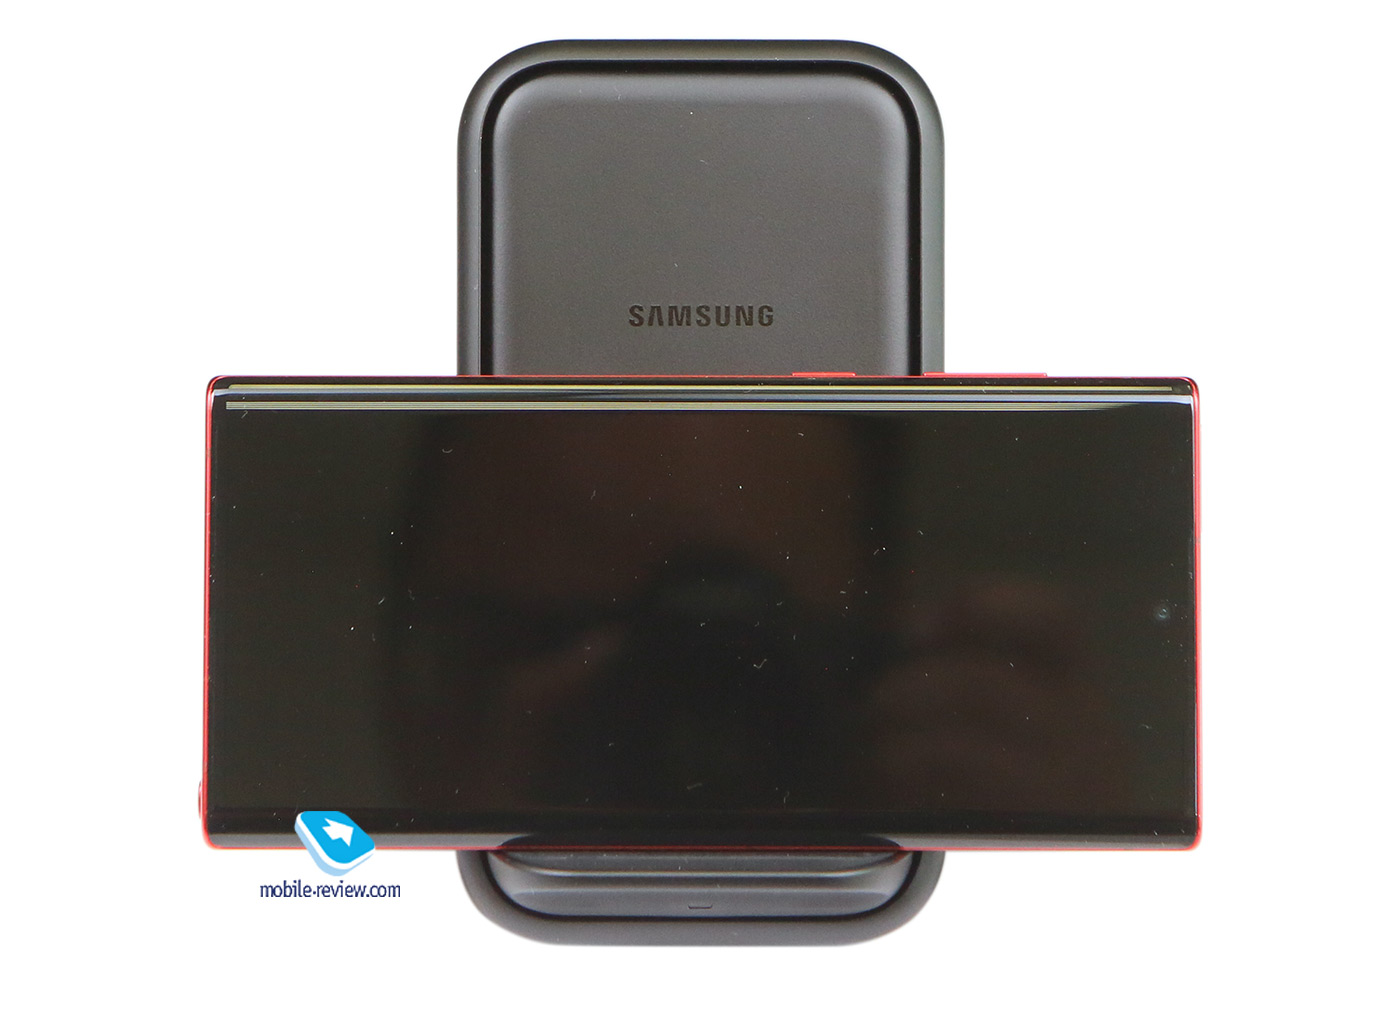 Обзор беспроводной зарядки на 15 Вт – Samsung Charger Stand (EP-N5200)